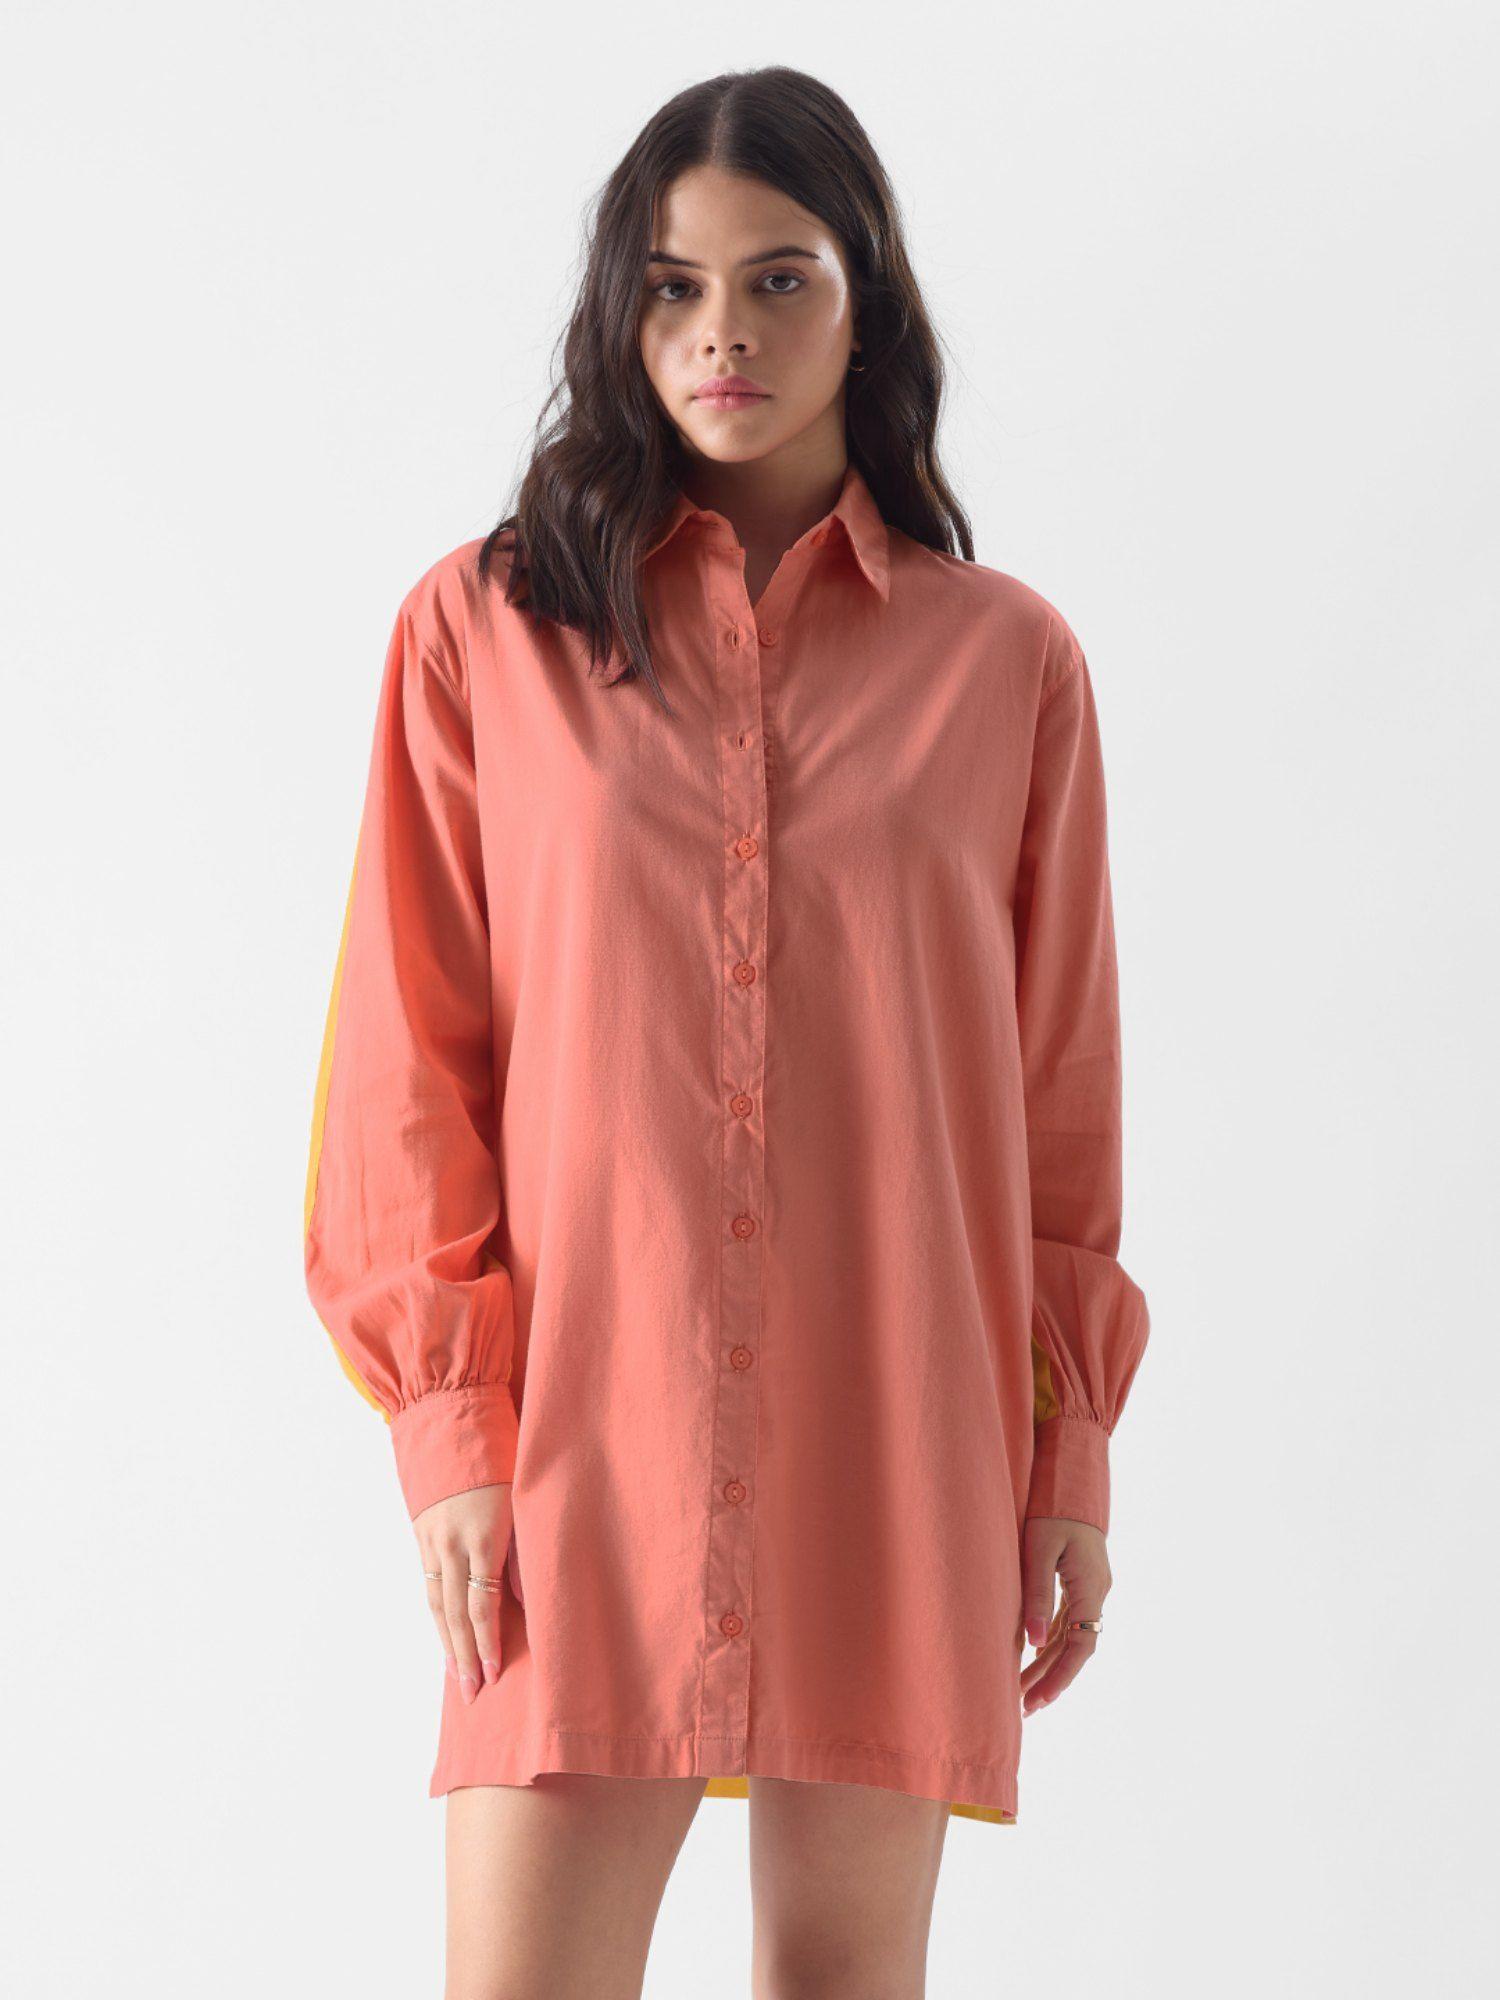 original coral summer shirt dresses for womens